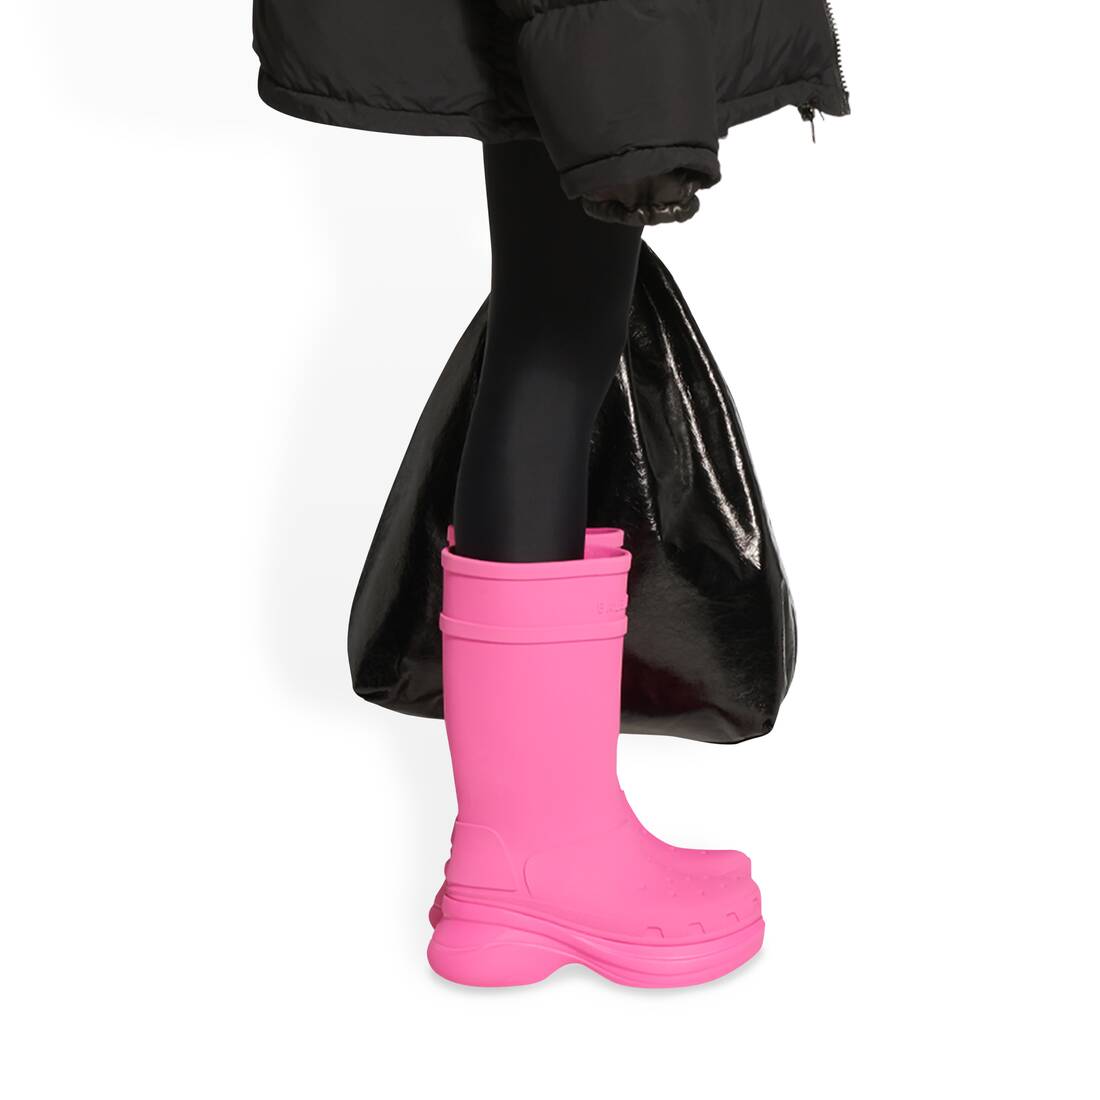 Chia sẻ 77+ về balenciaga pink boots hay nhất